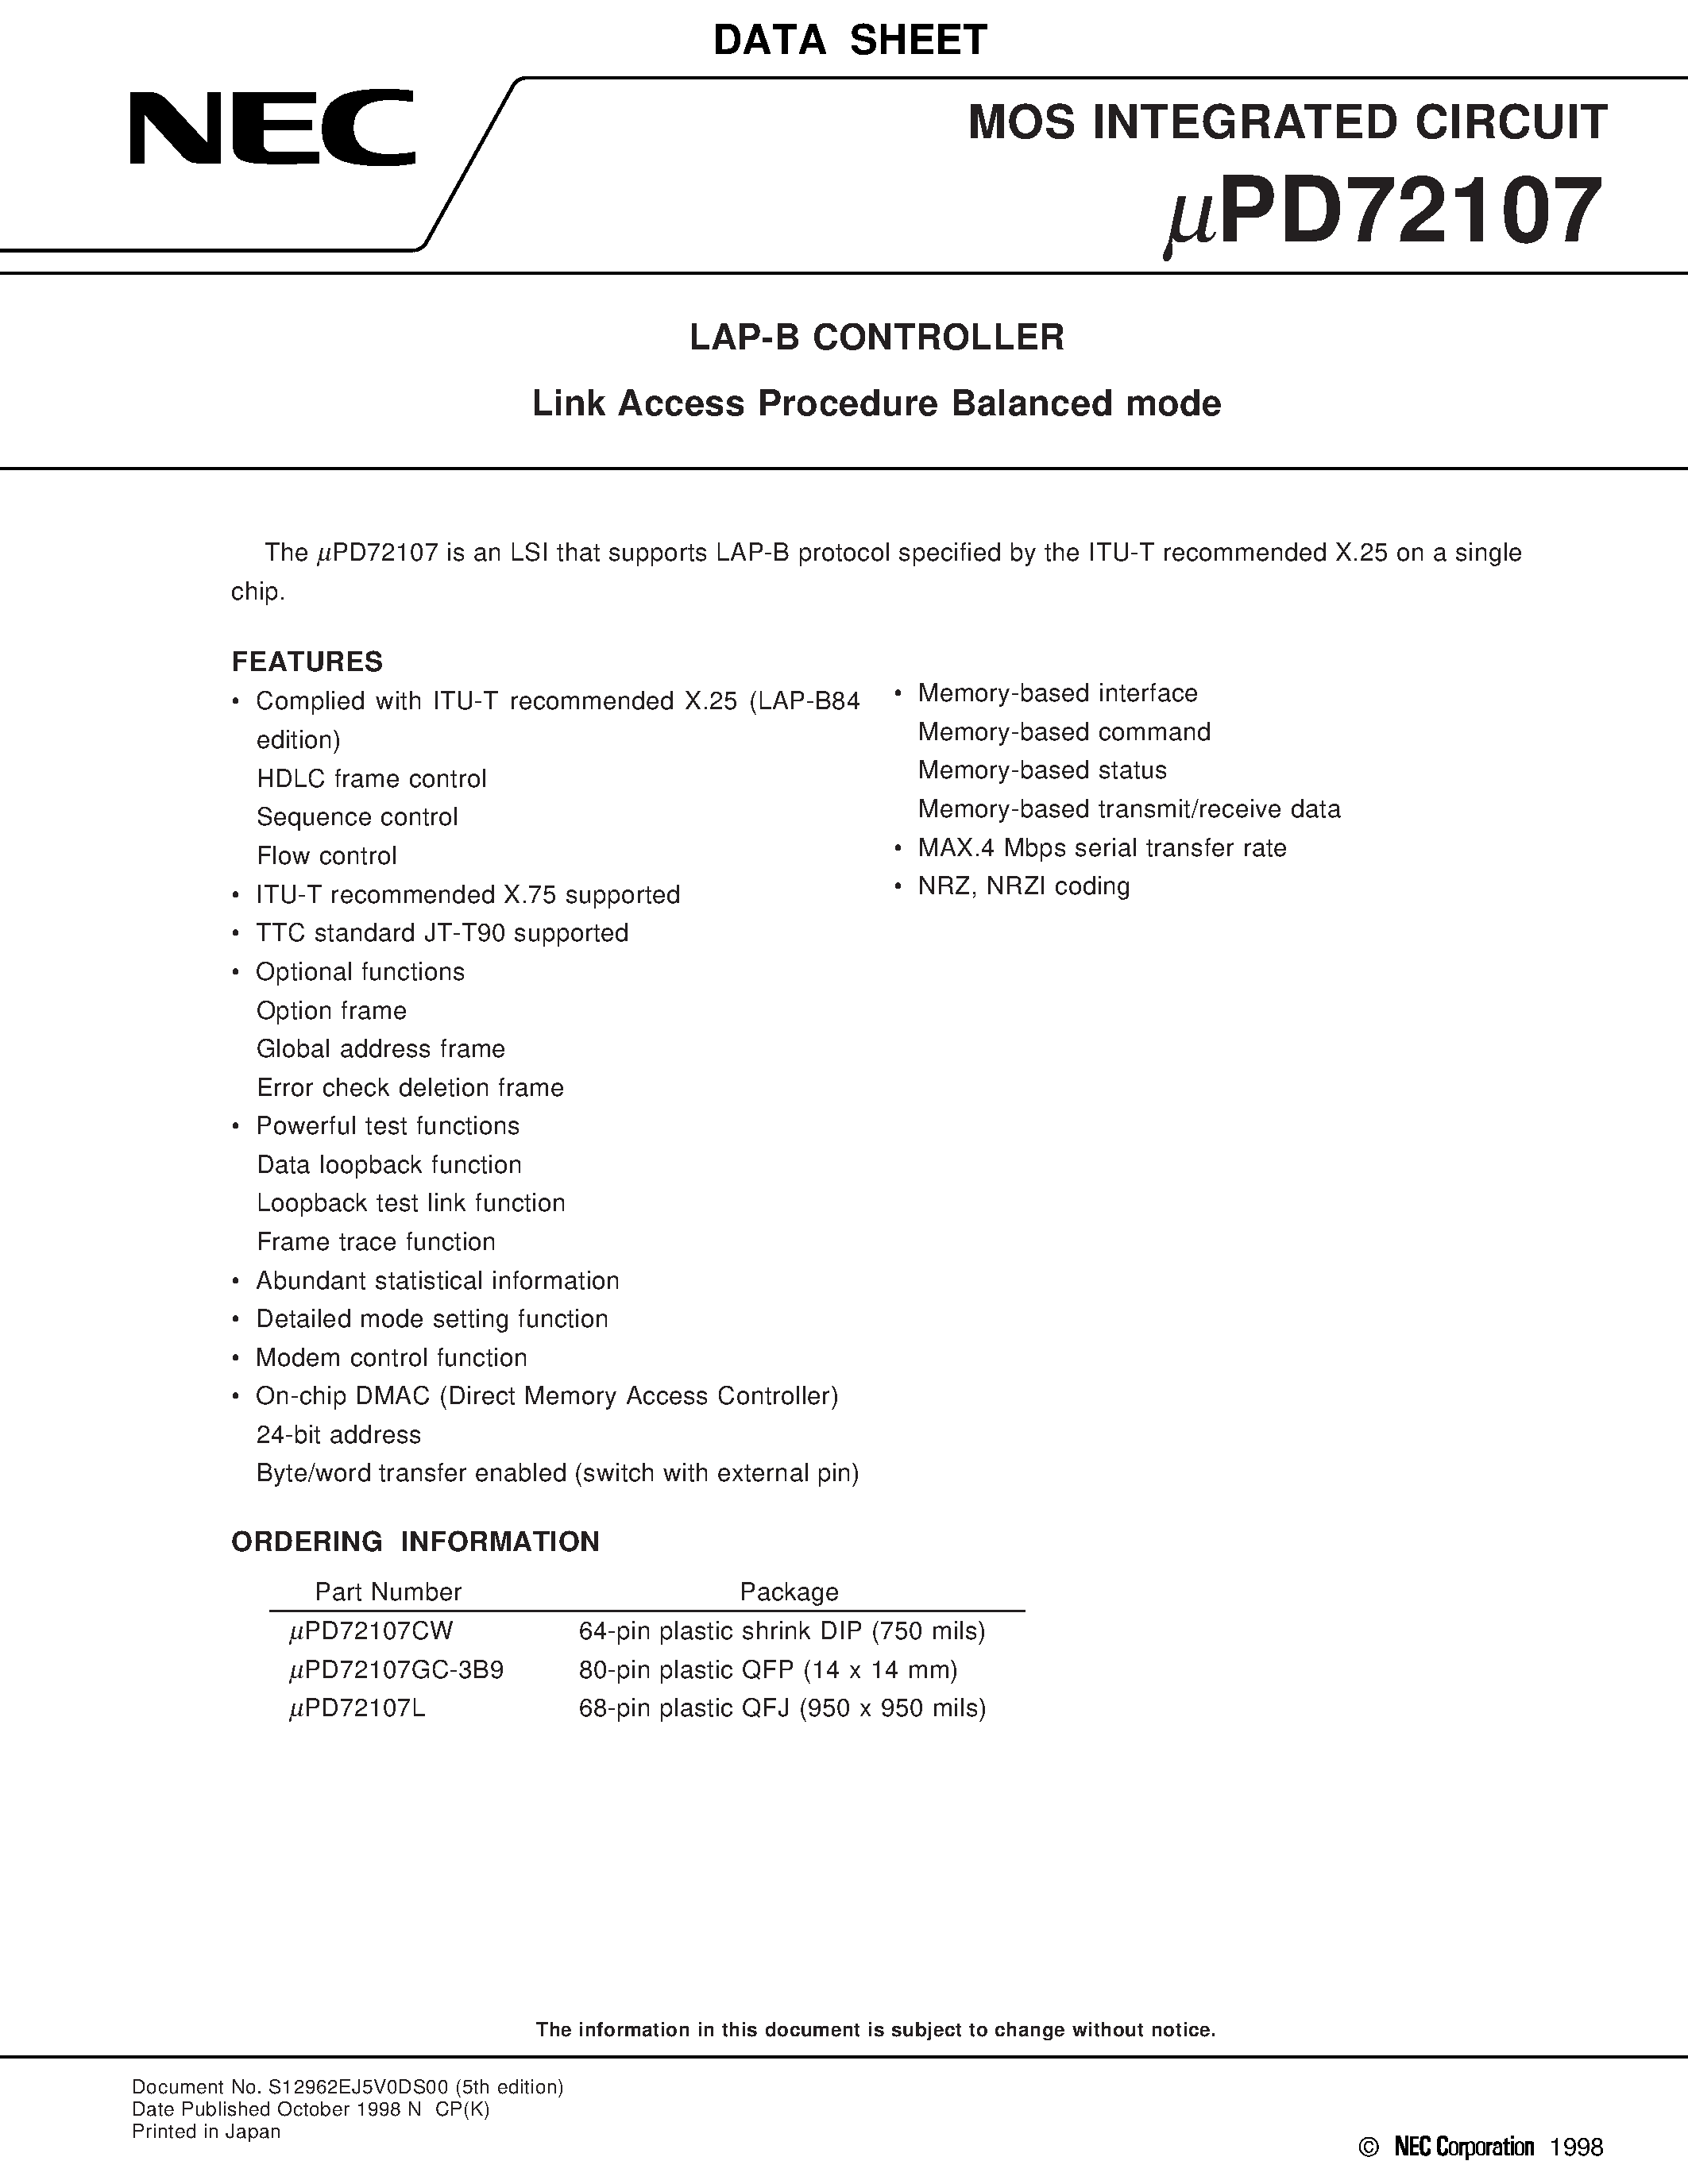 Даташит uPD72107GC-3B9 - LAP-B CONTROLLER(Link Access Procedure Balanced mode) страница 1